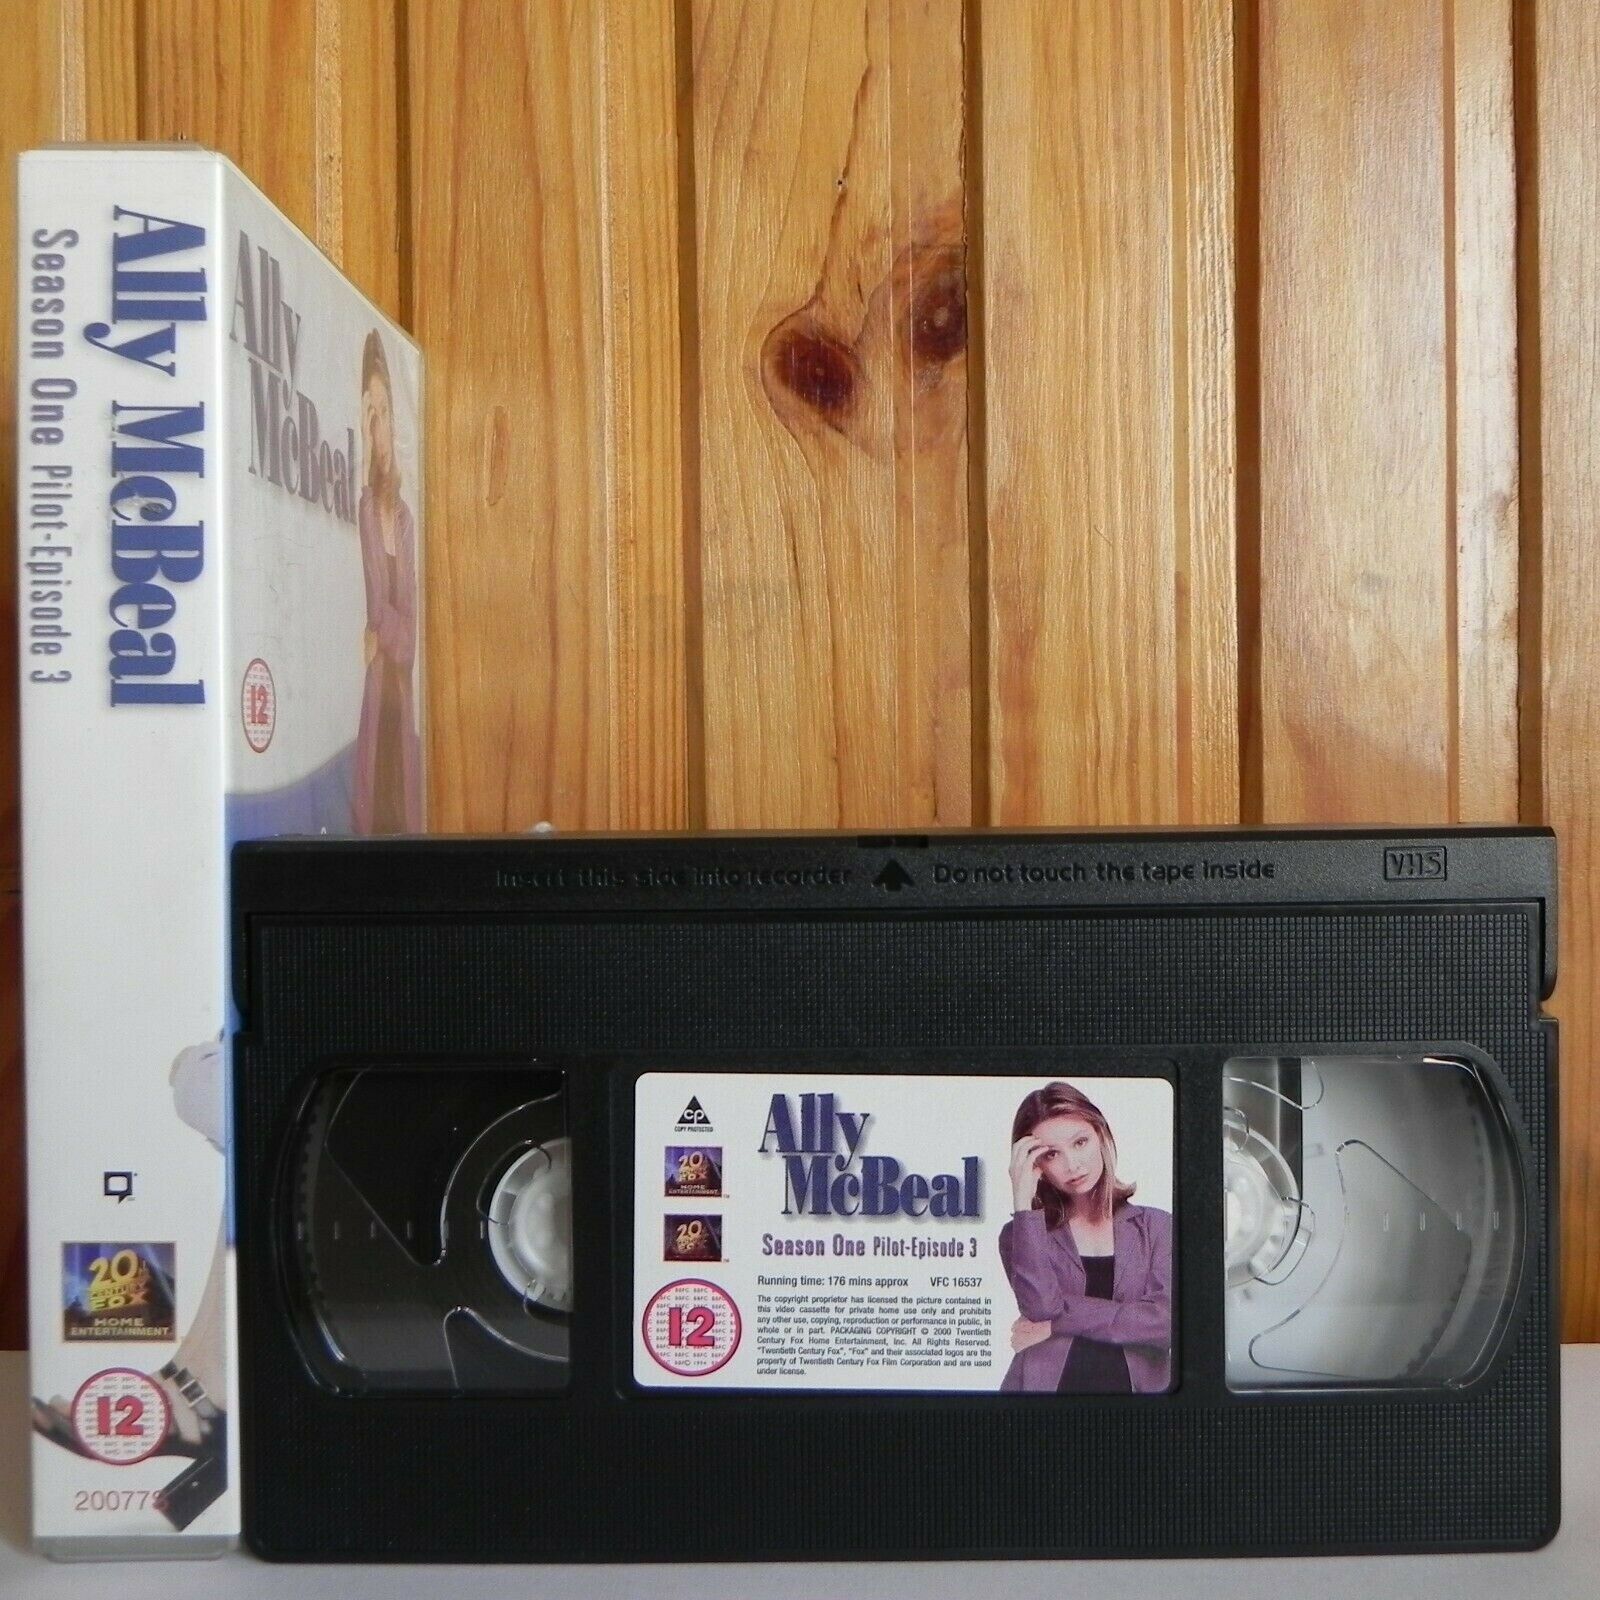 Ally McBeal: 1st Time On T.V - Season One - Pilot-Episode 3 - TV Show - Pal VHS-